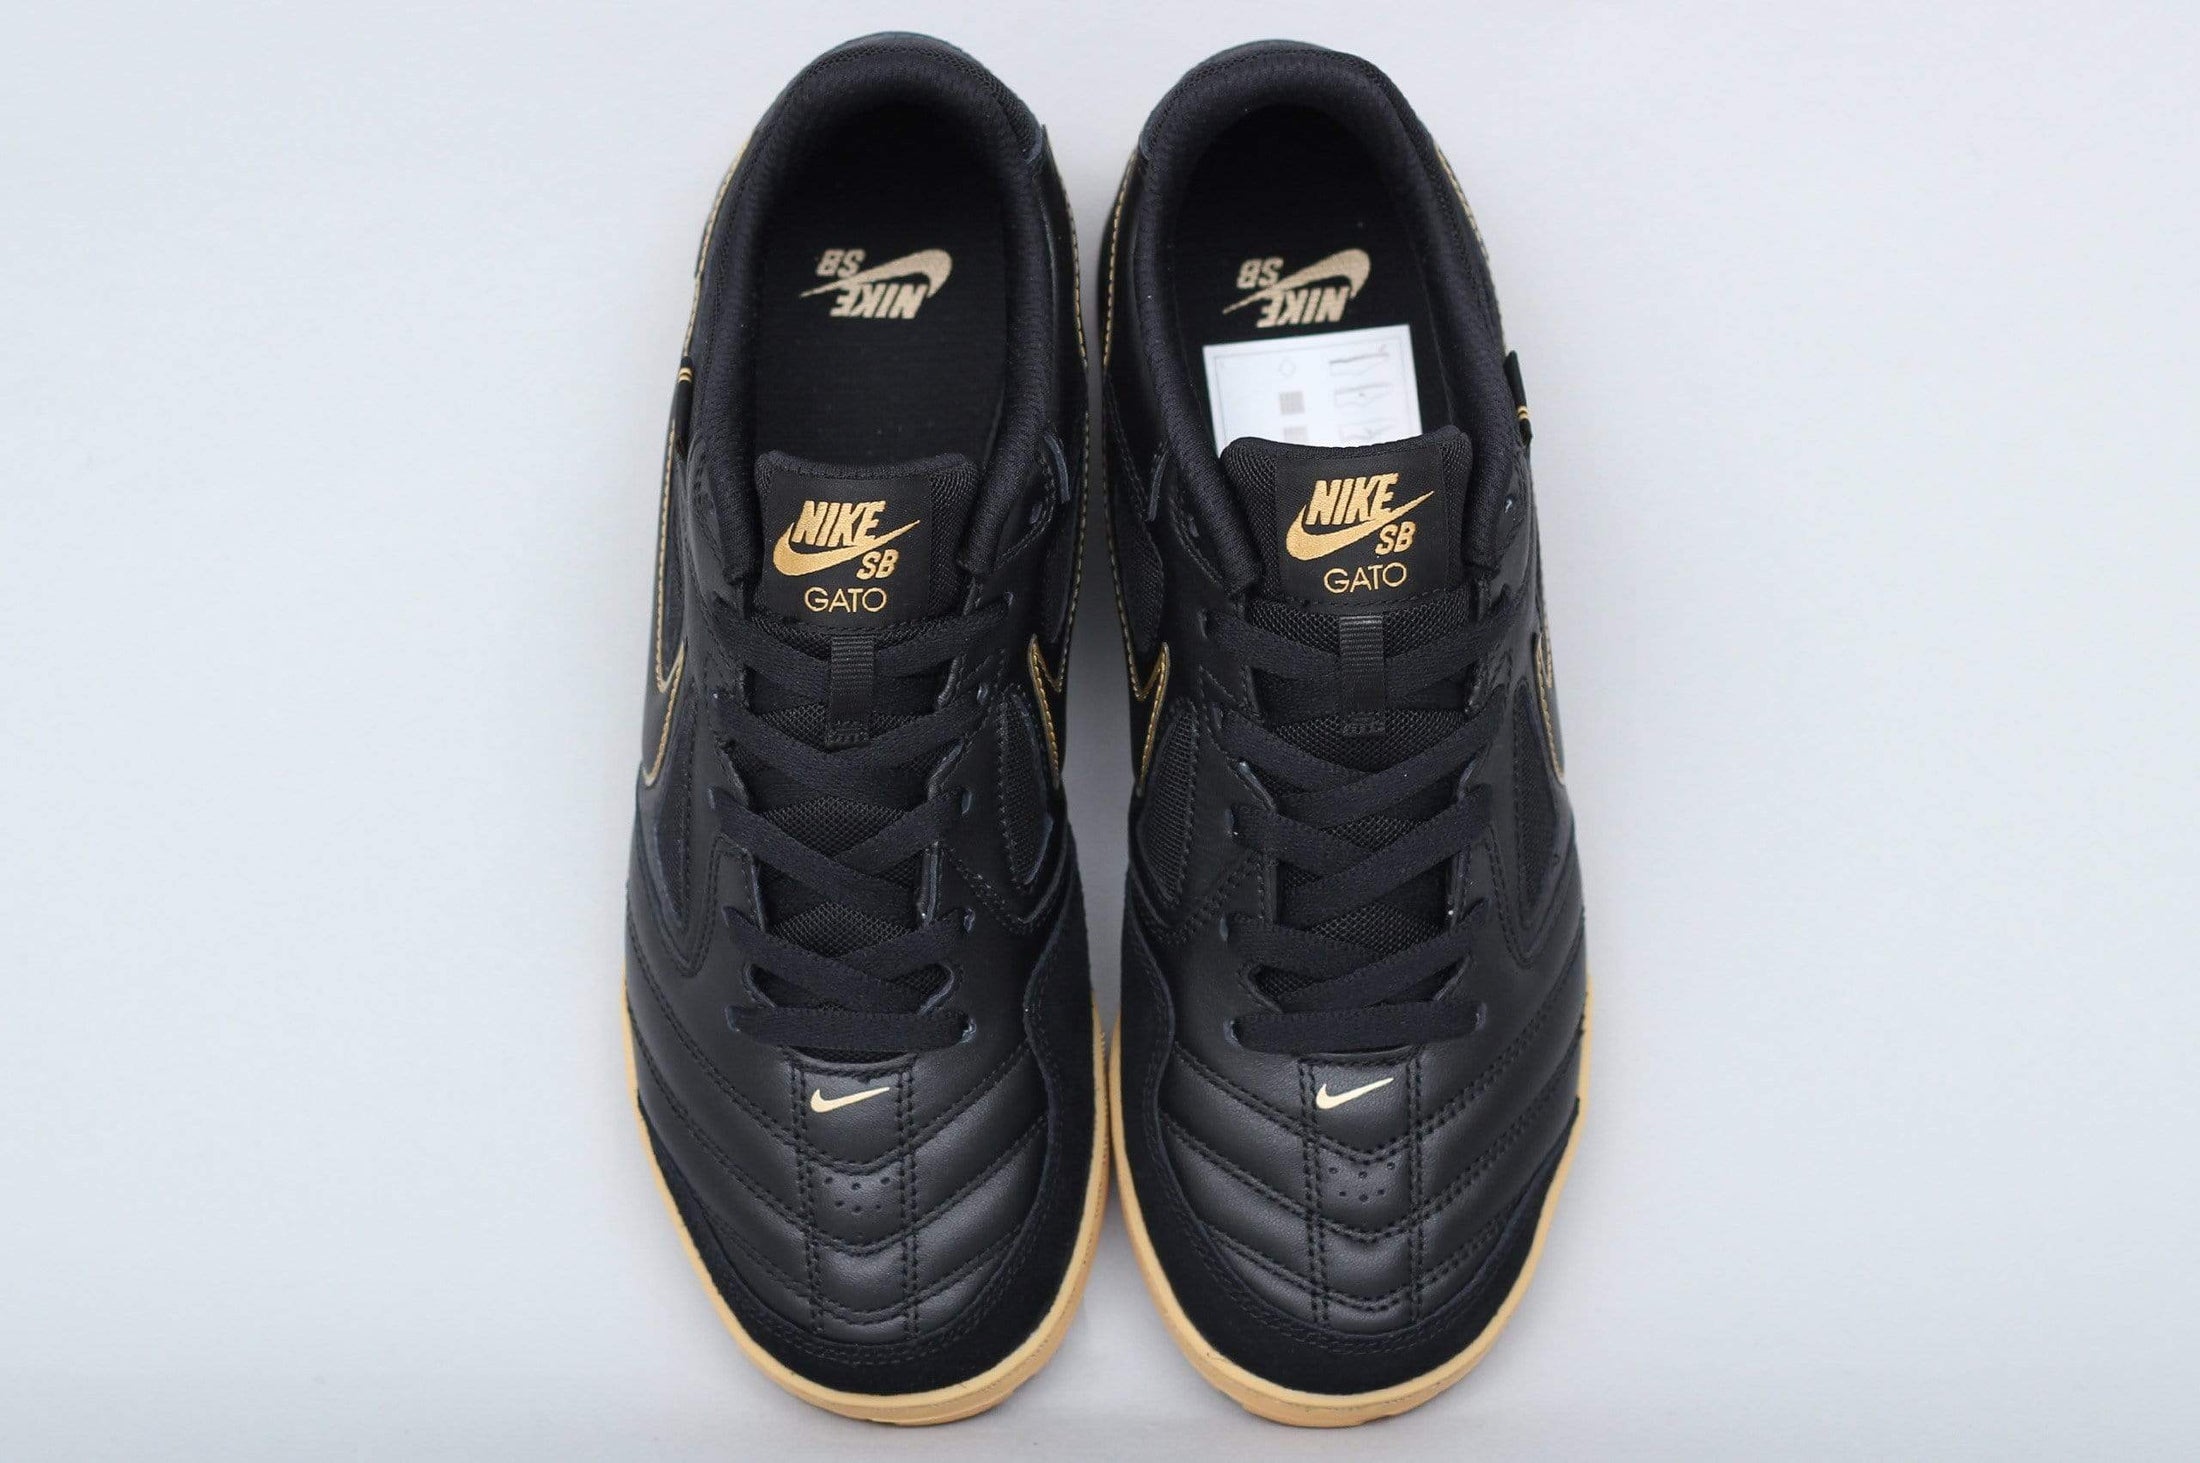 Nike SB Gato Shoes Black / Black - Metallic Gold